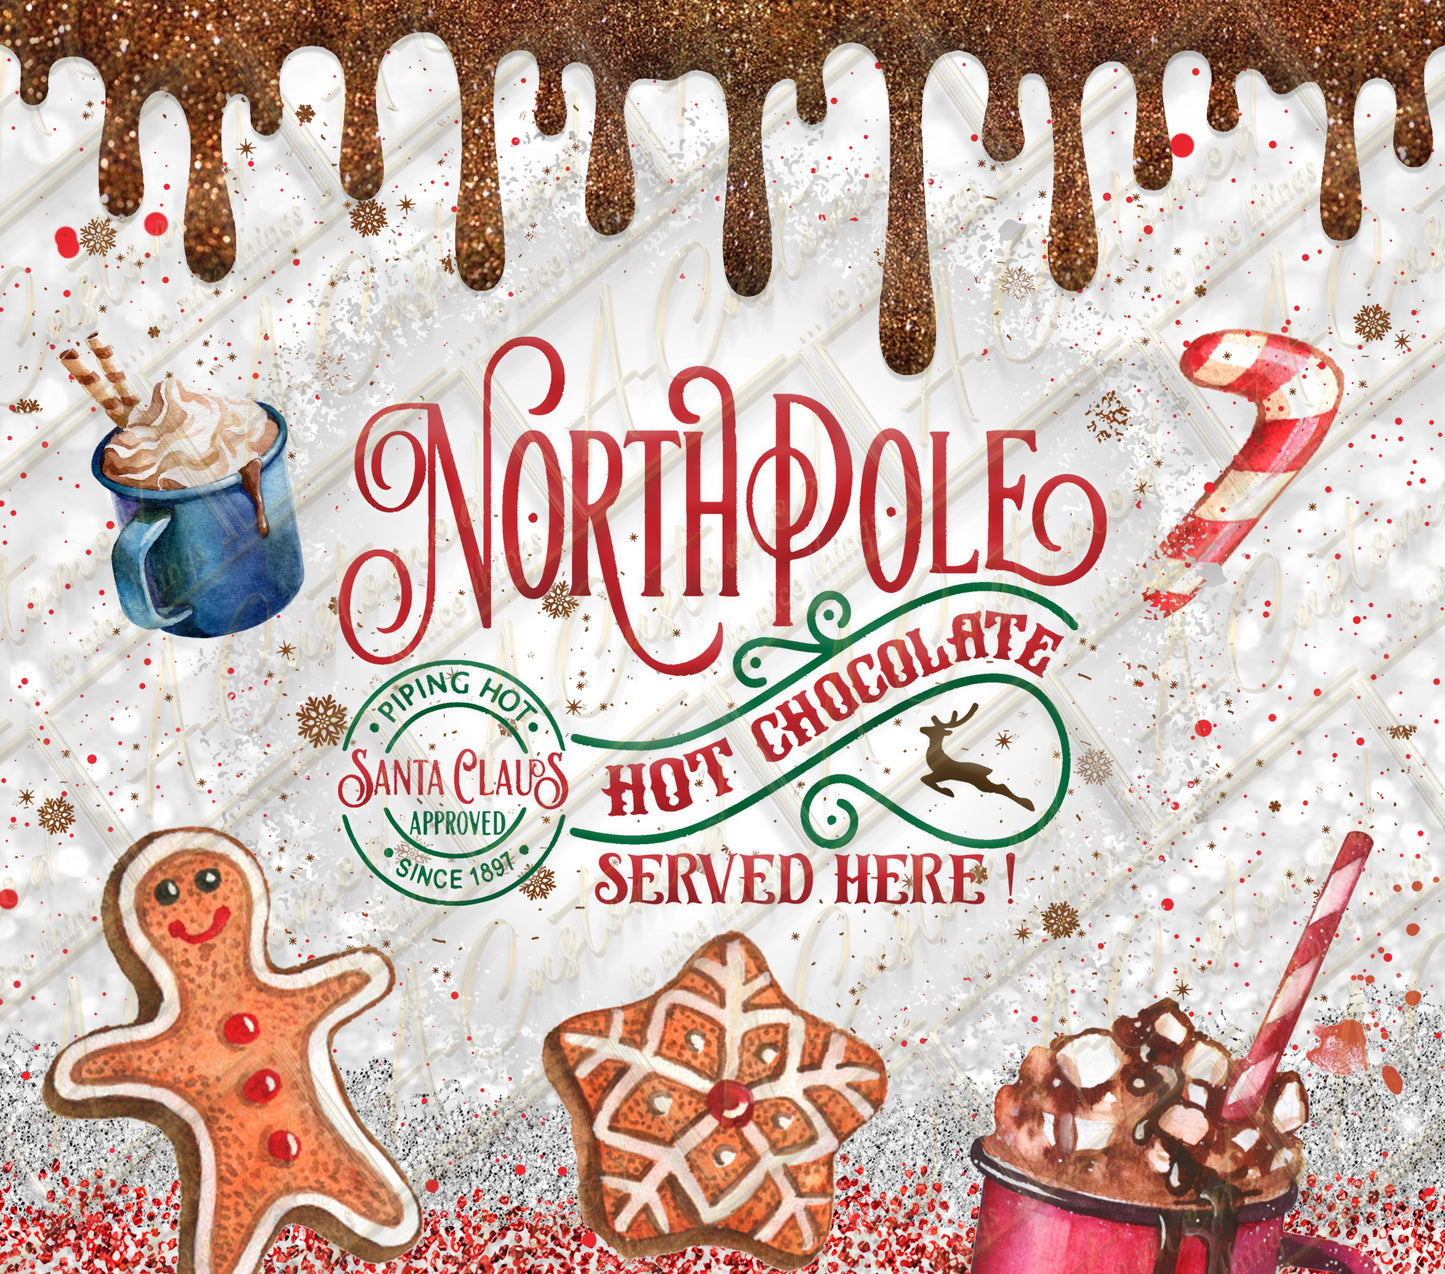 Northpole Hot Chocolate